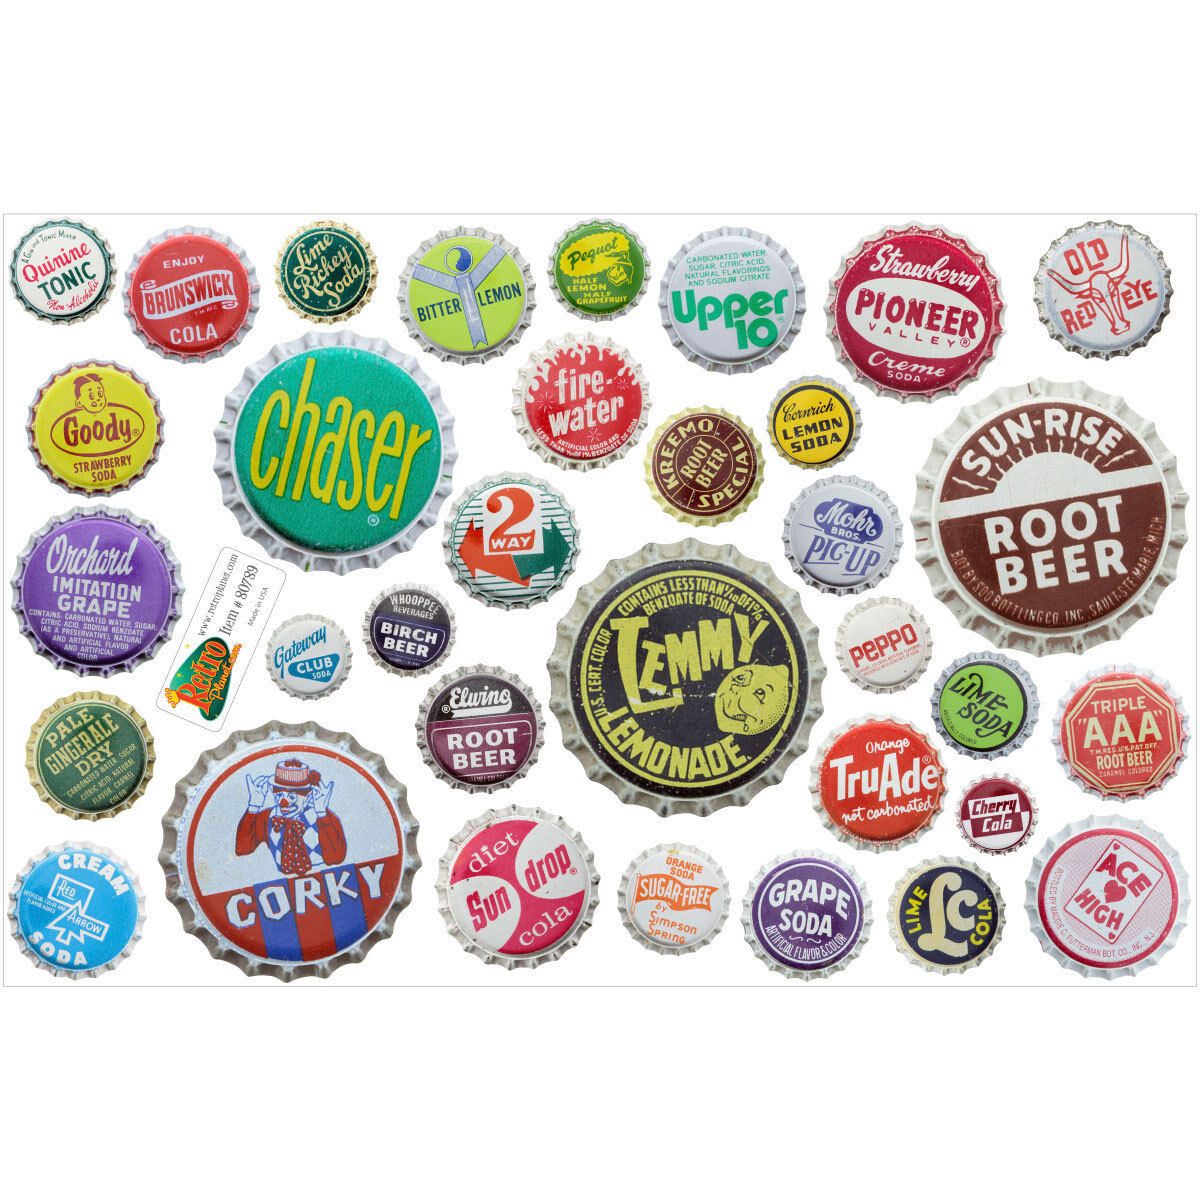 Soda Pop Bottle Caps Vinyl Sticker Sheet of 33 Vintage Style Decals